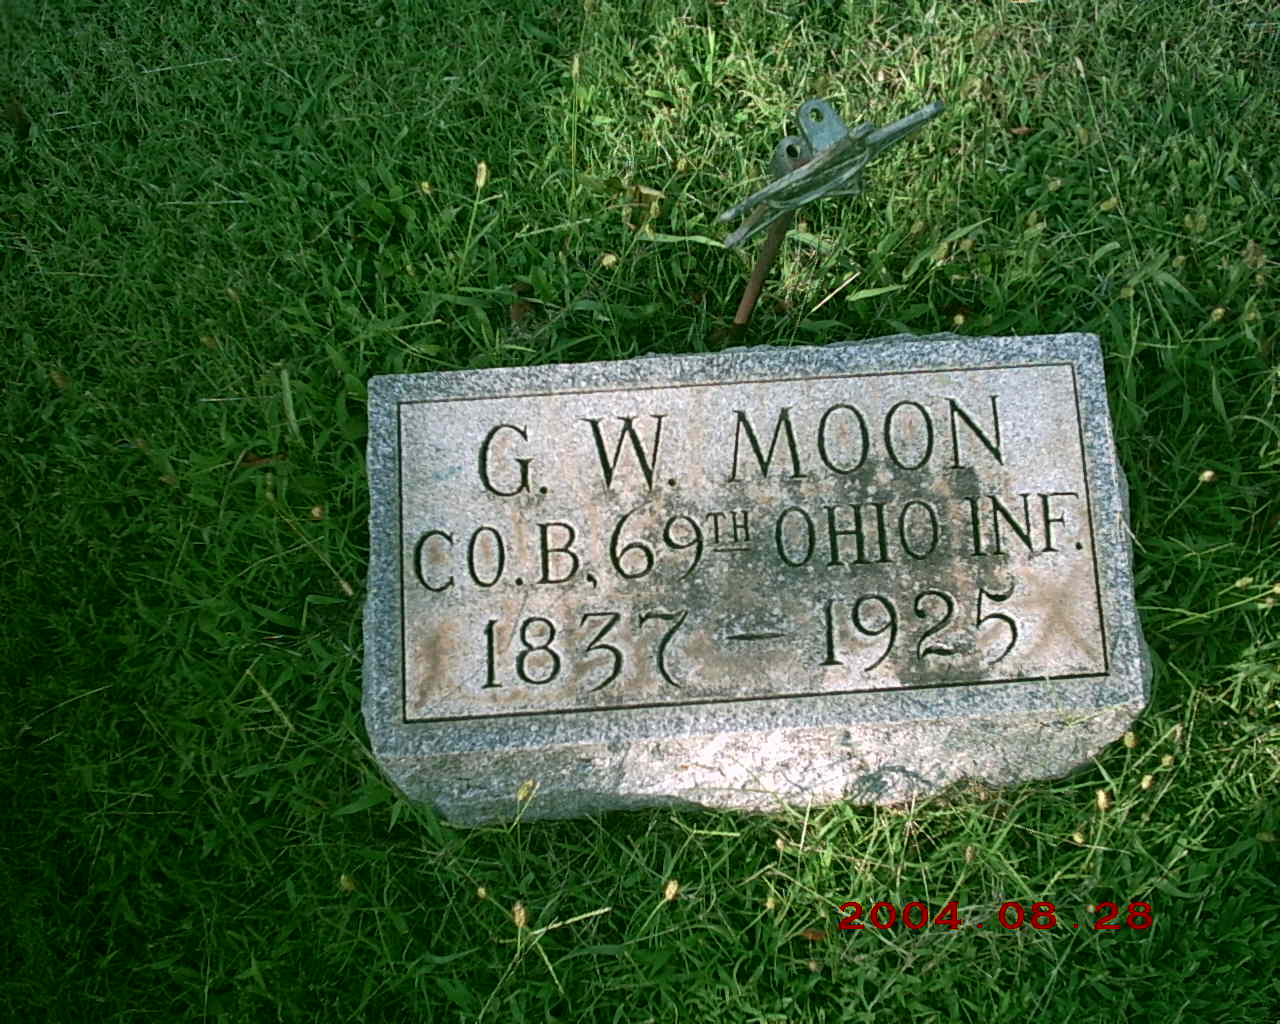 George W. Moon